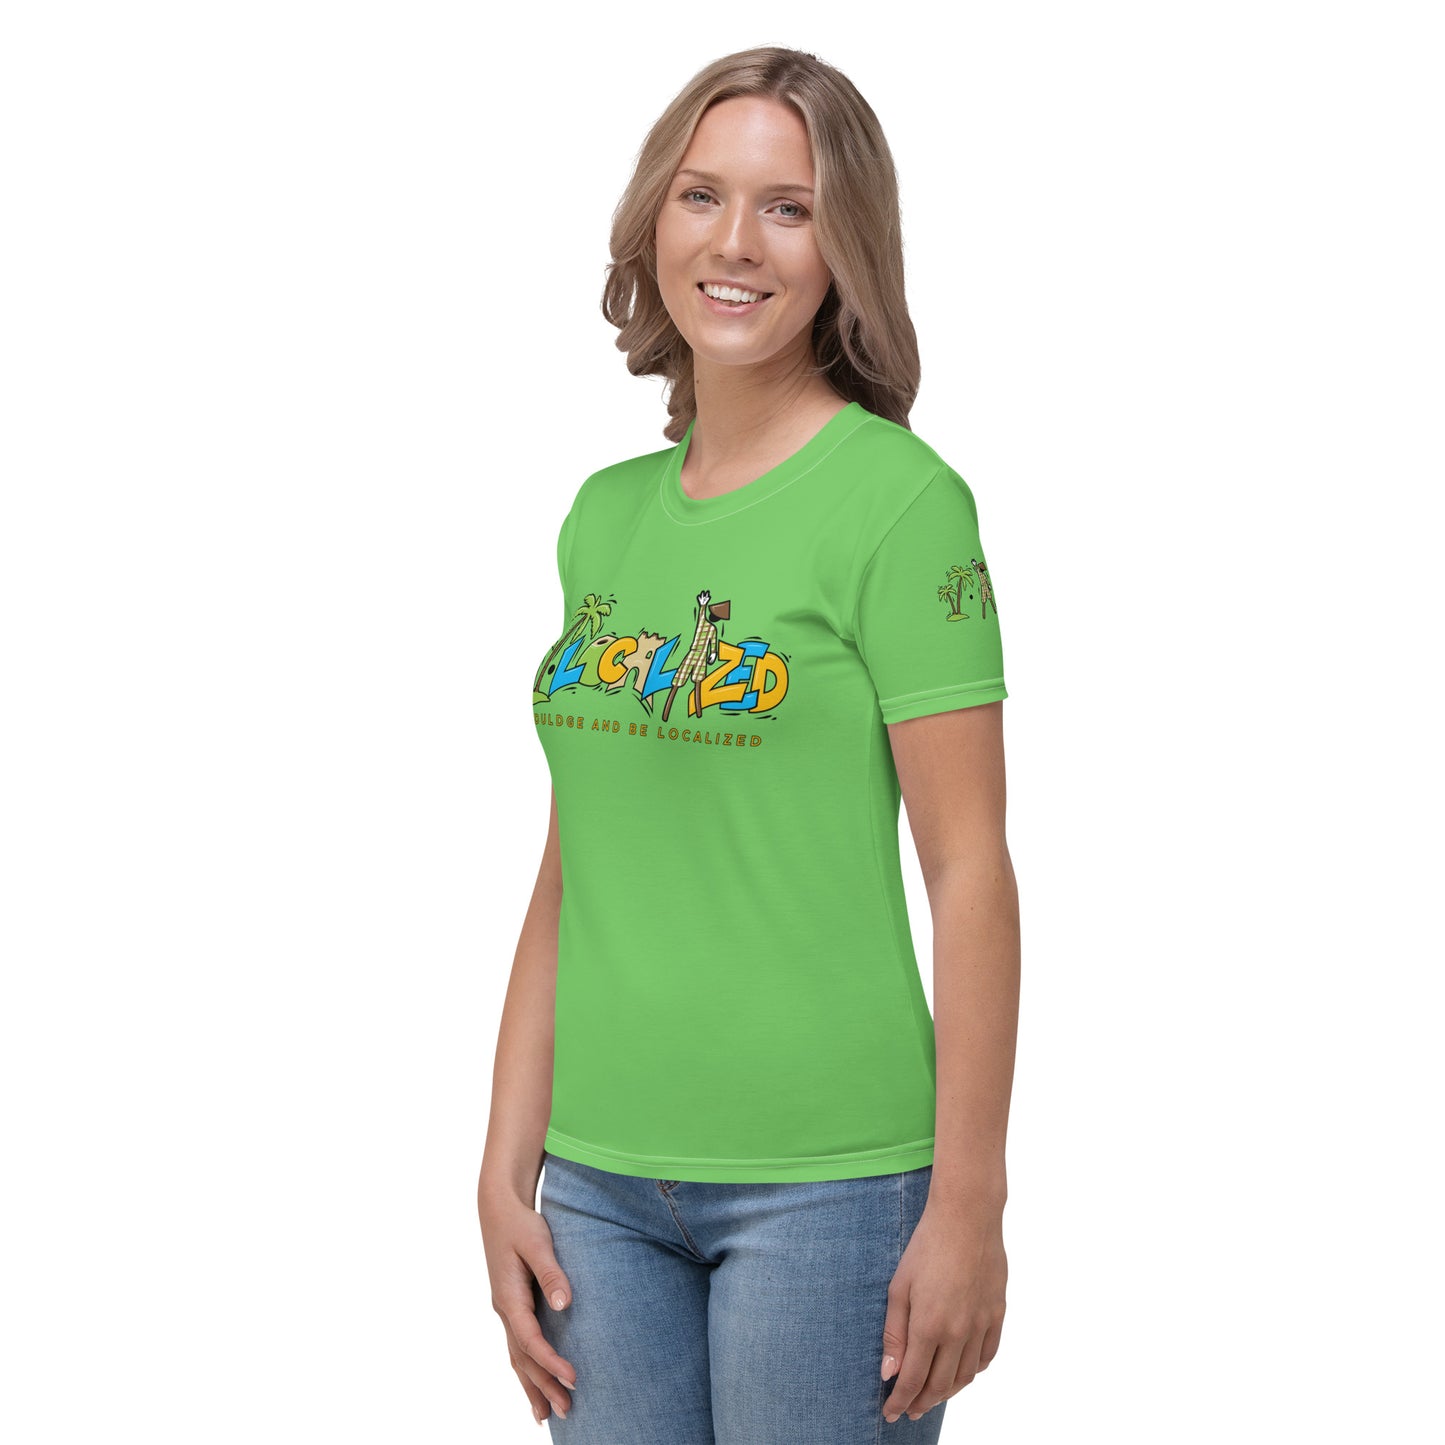 Green V.Localized (Regular) Women’s Dry-Fit T-Shirt